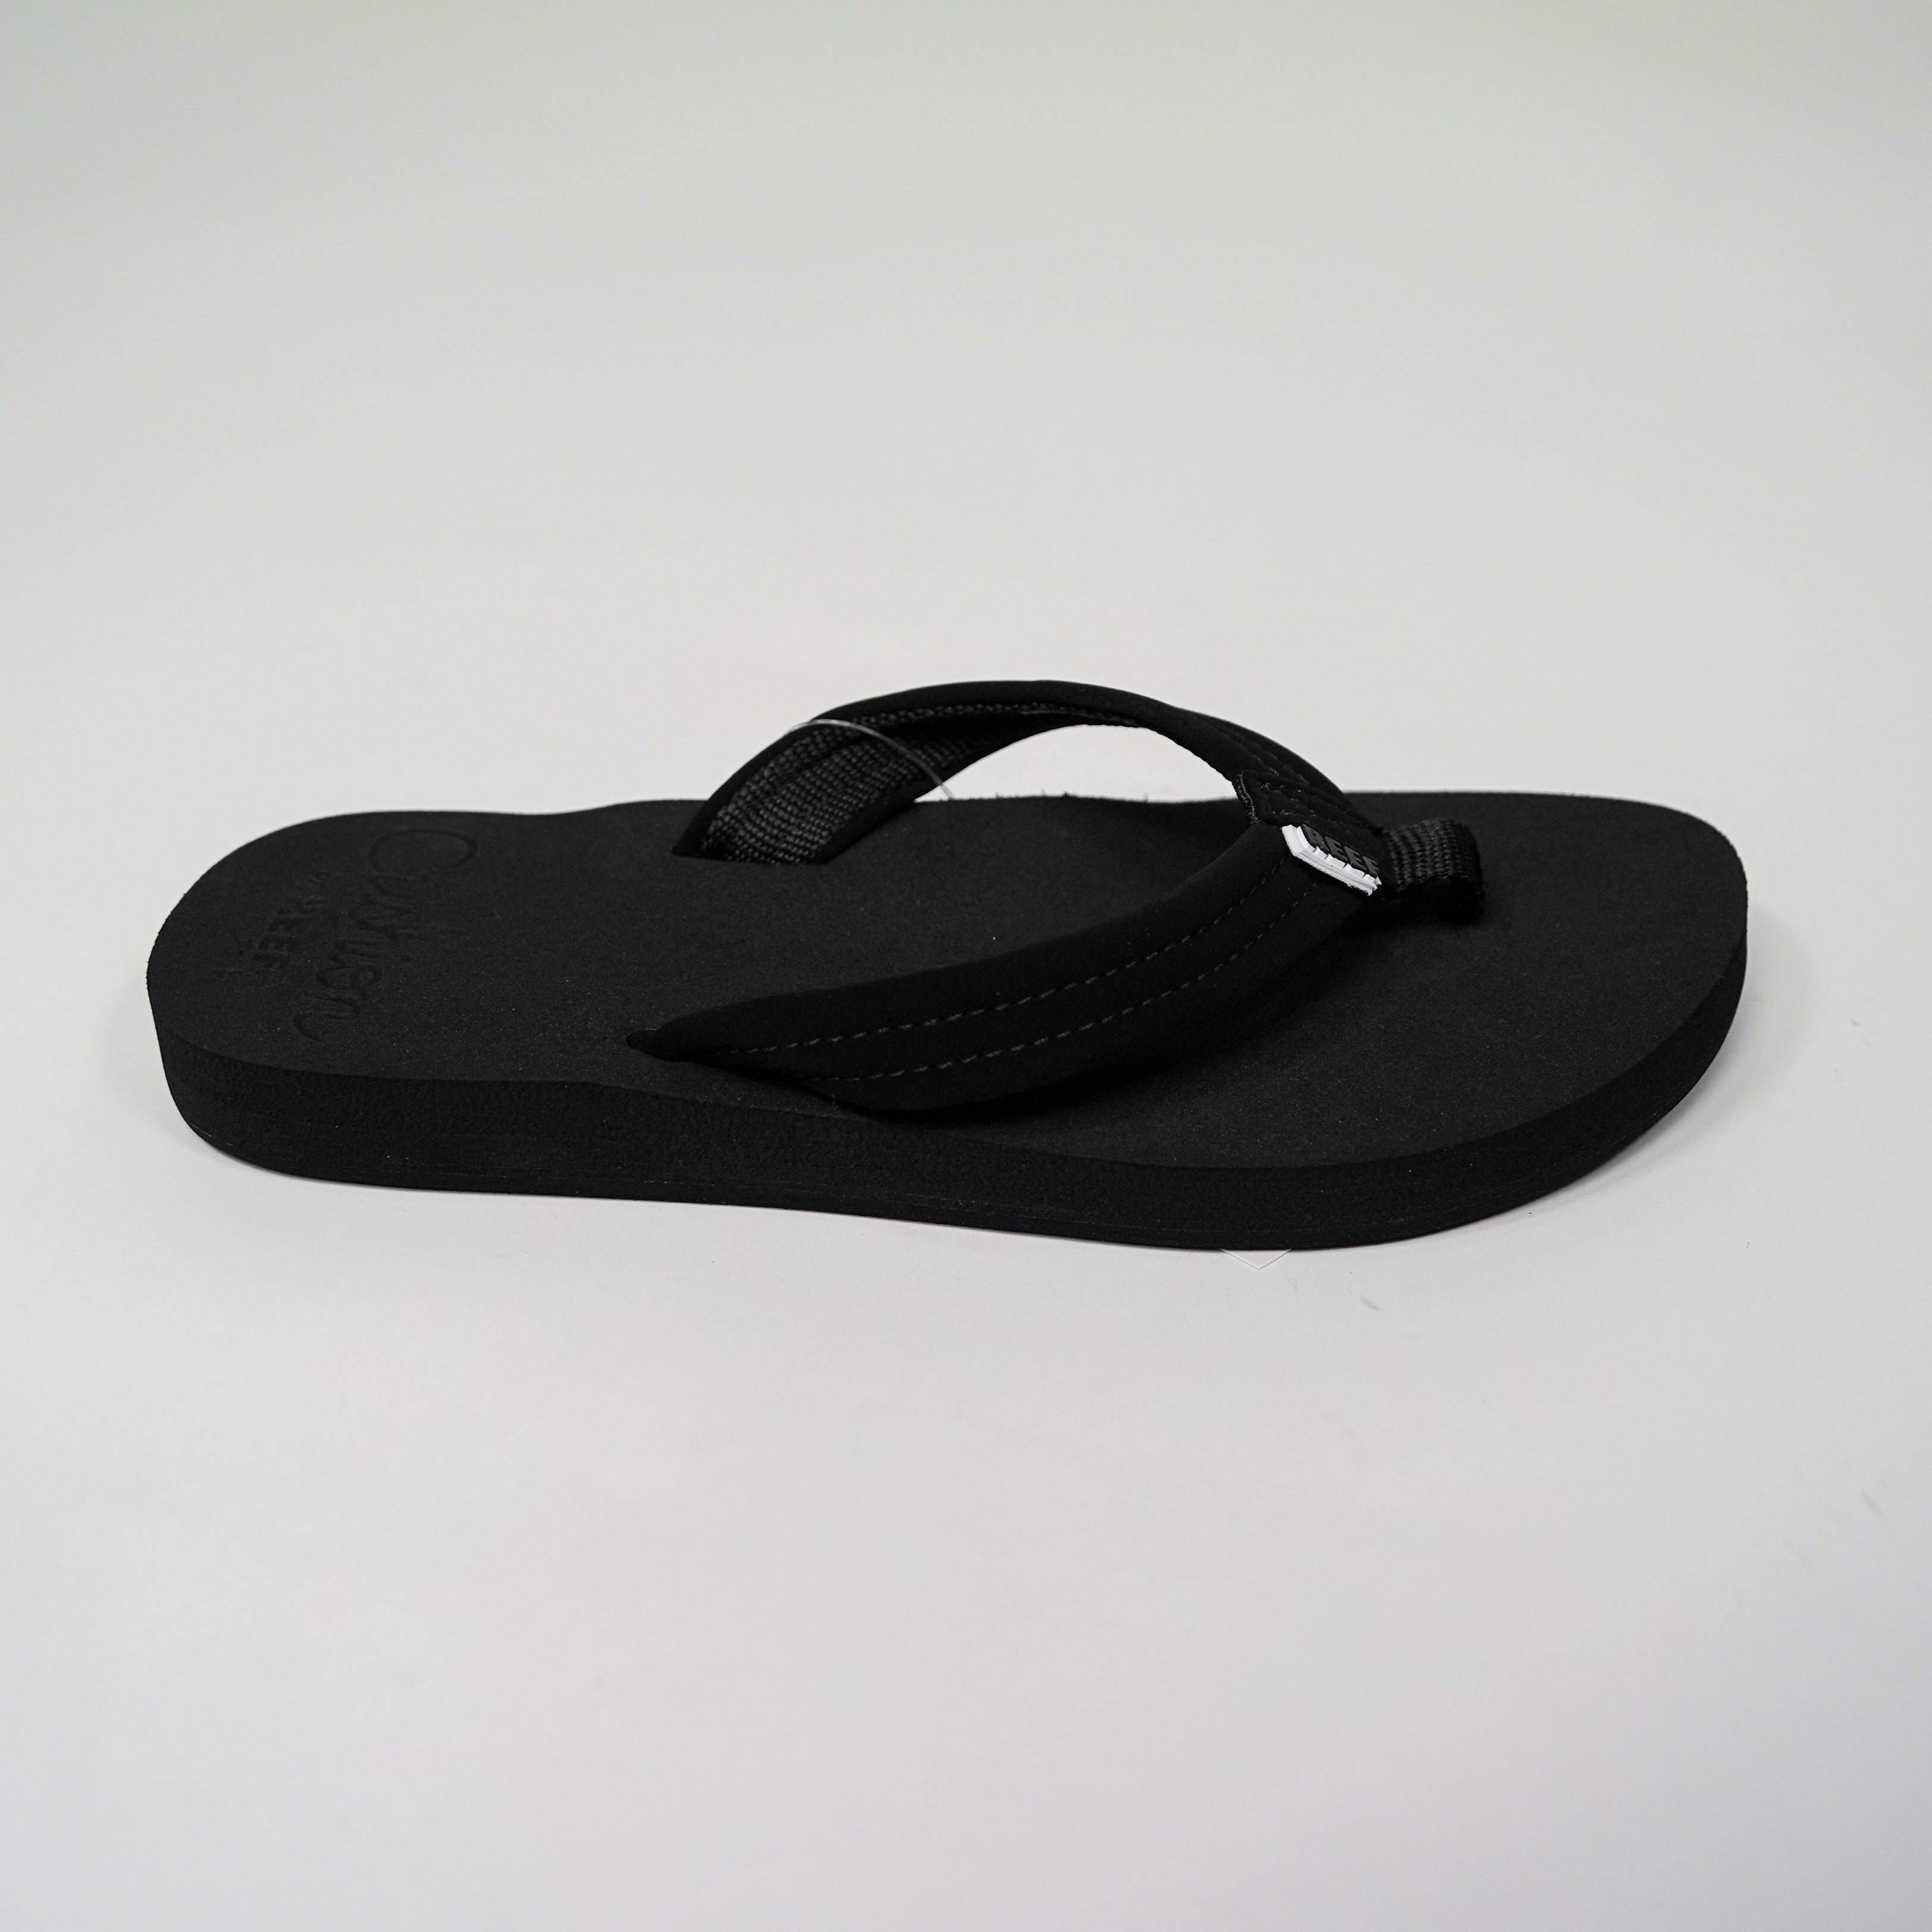  Reef Women's Sandals, Reef Cushion Breeze, Black/Black, 5